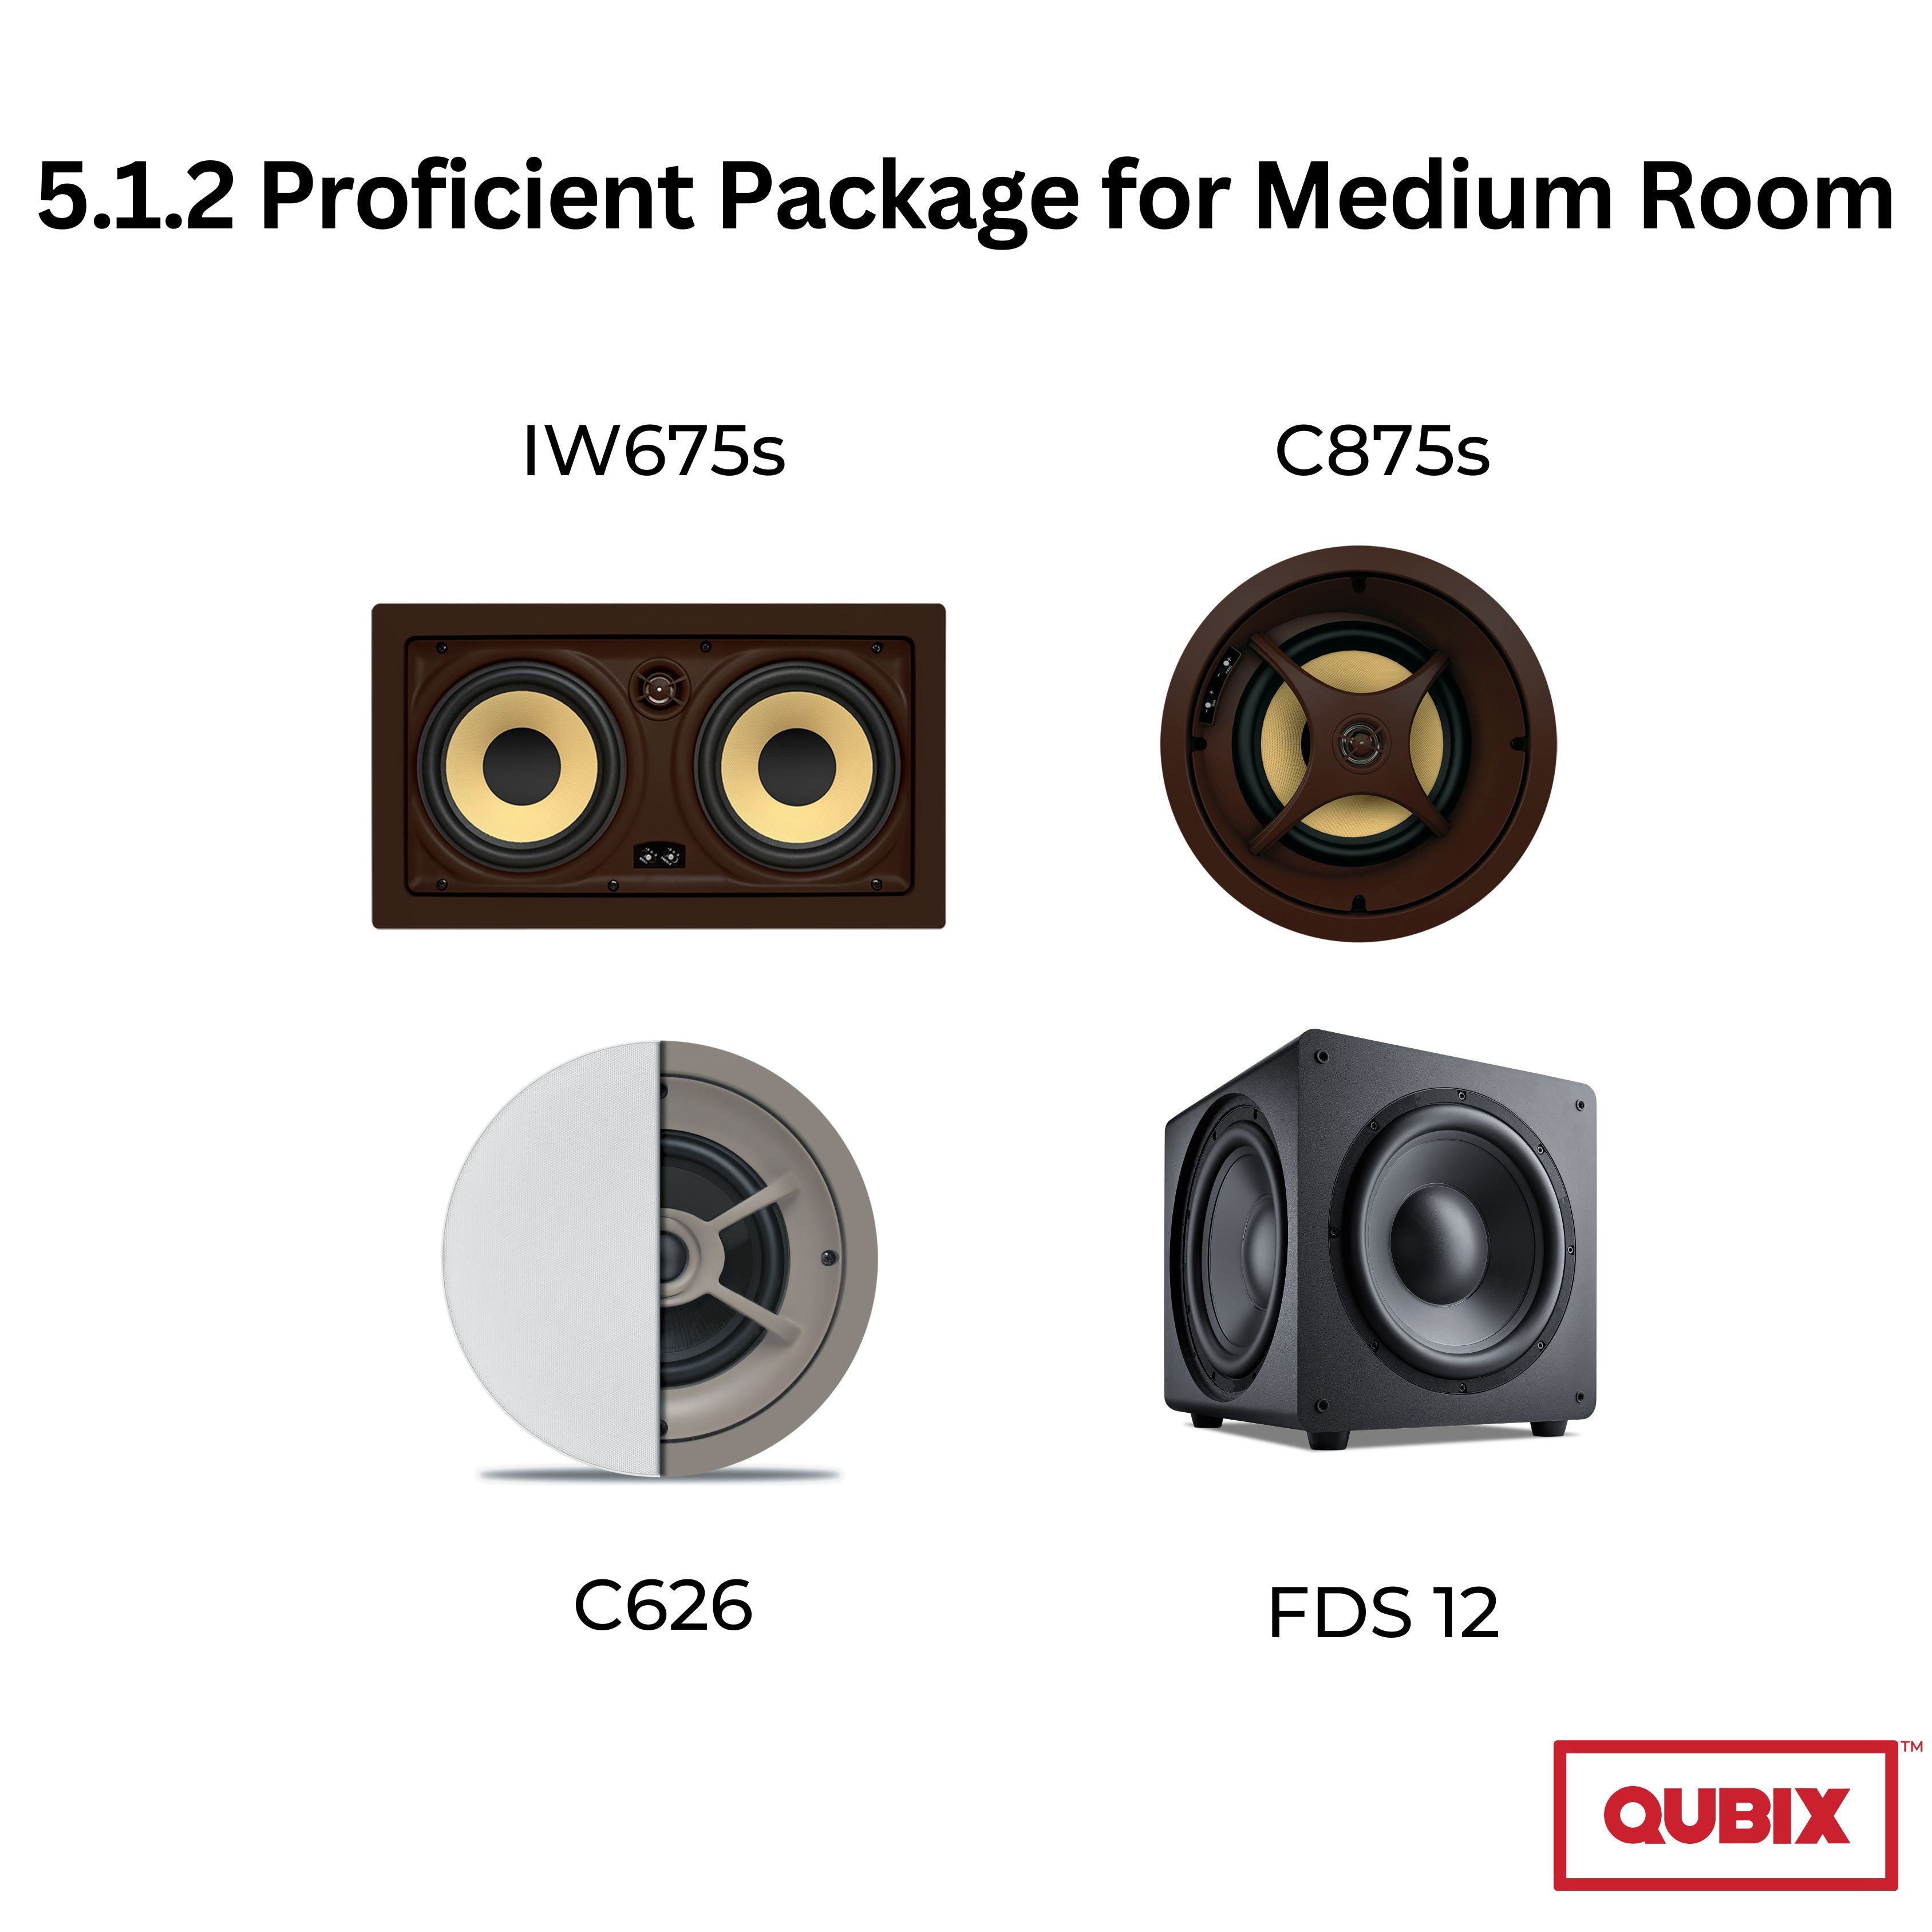 5.1.2 Proficient Package for Medium Room